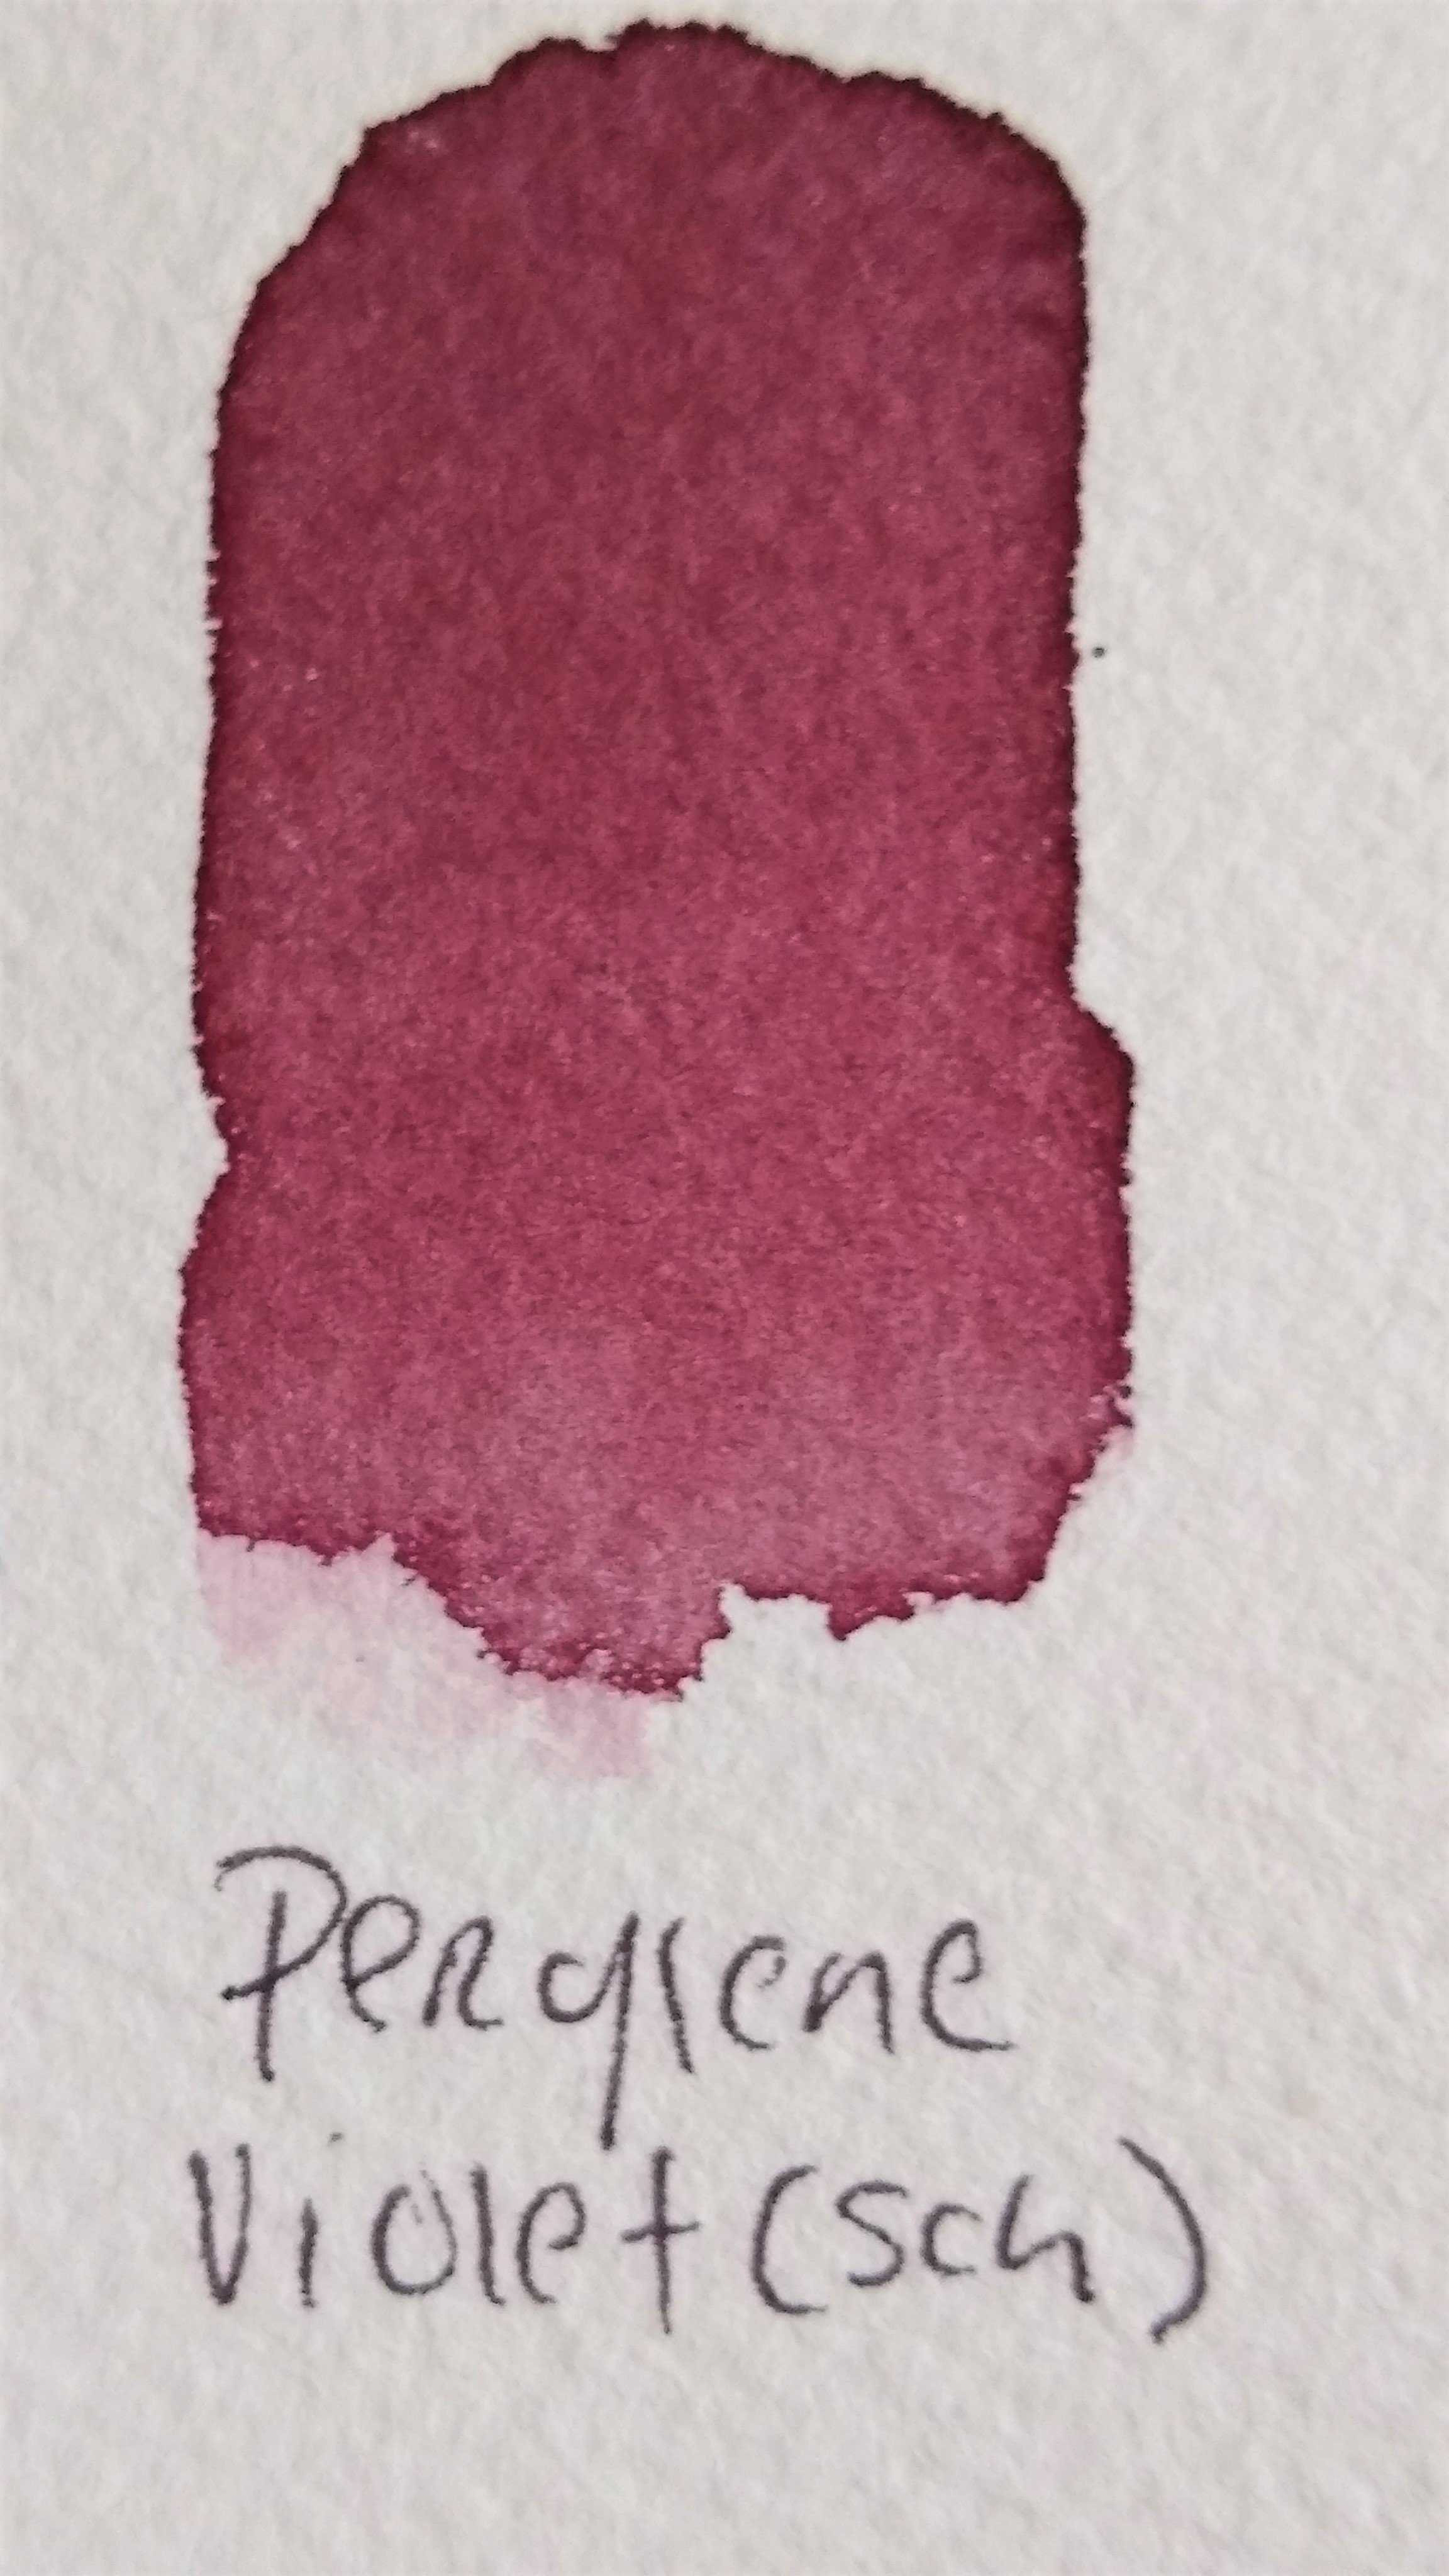 Tintex - All purpose fabric dye - #2 Purple. Colour: mauve